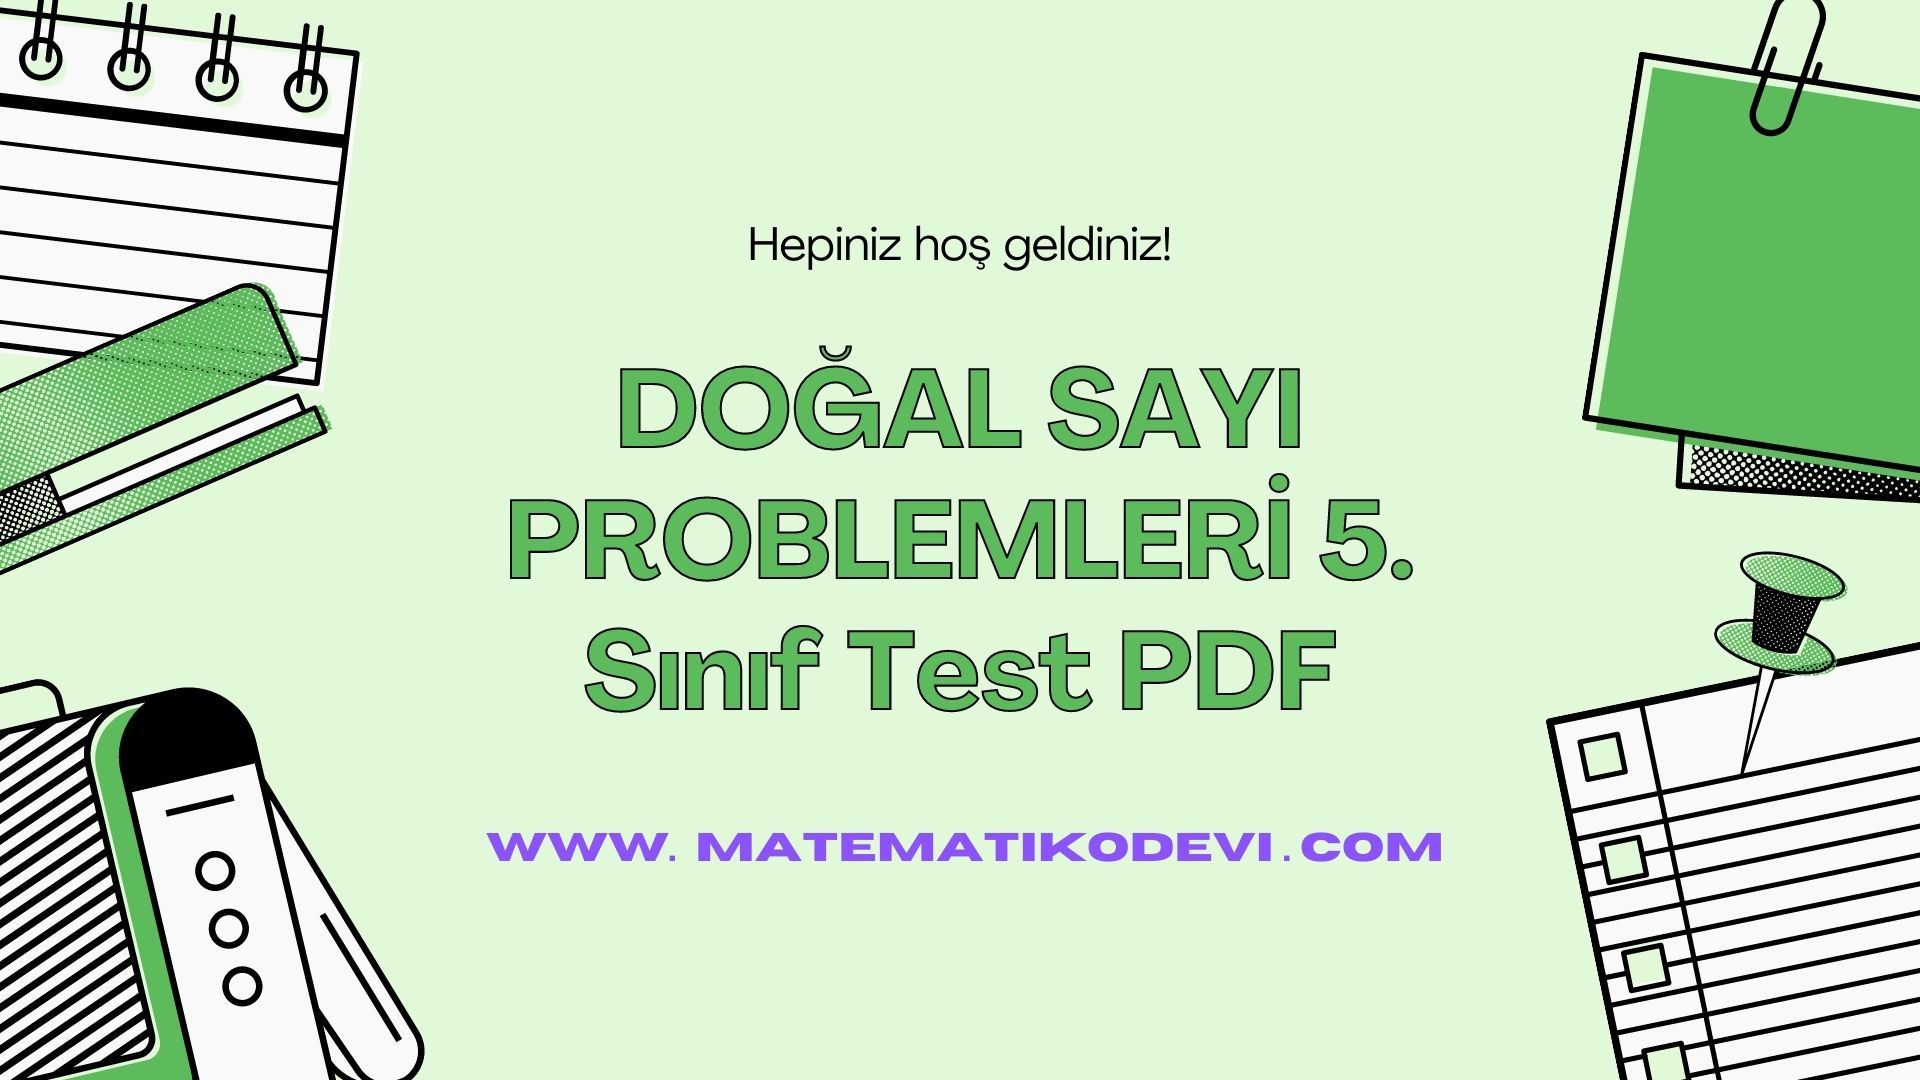 DOGAL SAYI PROBLEMLERI 5. Sinif Test PDF